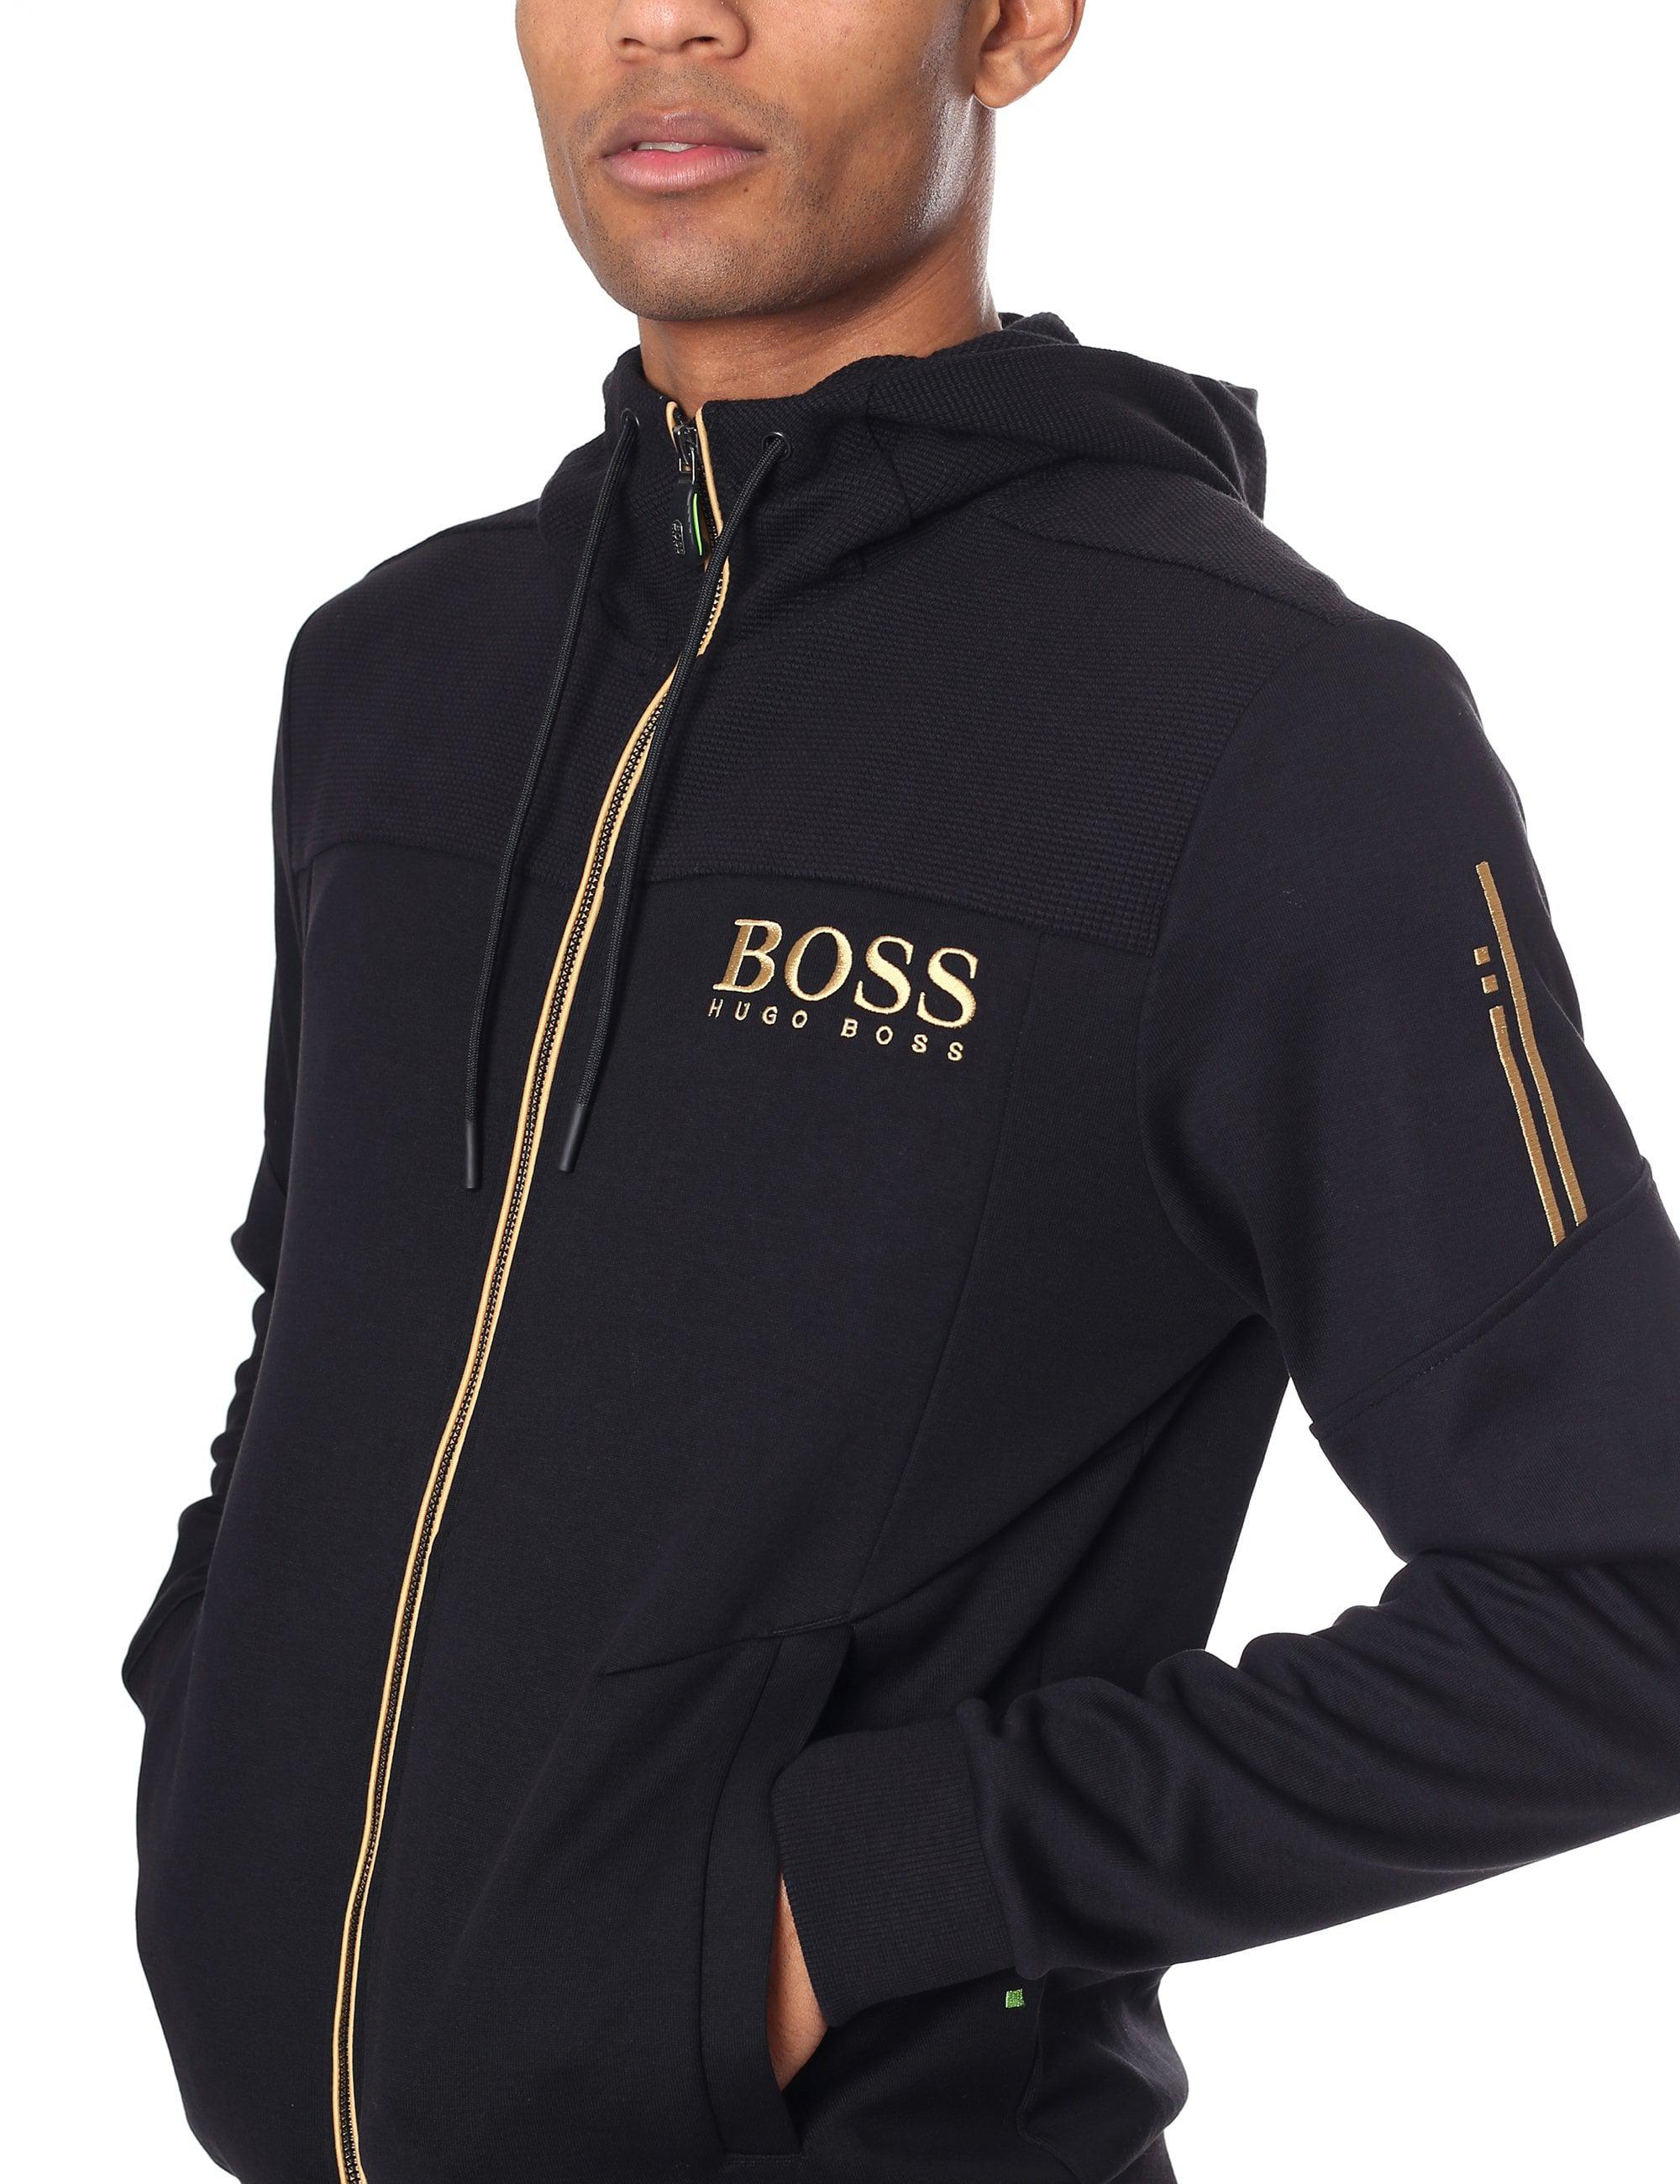 boss hugo boss full zip sweatshirt black